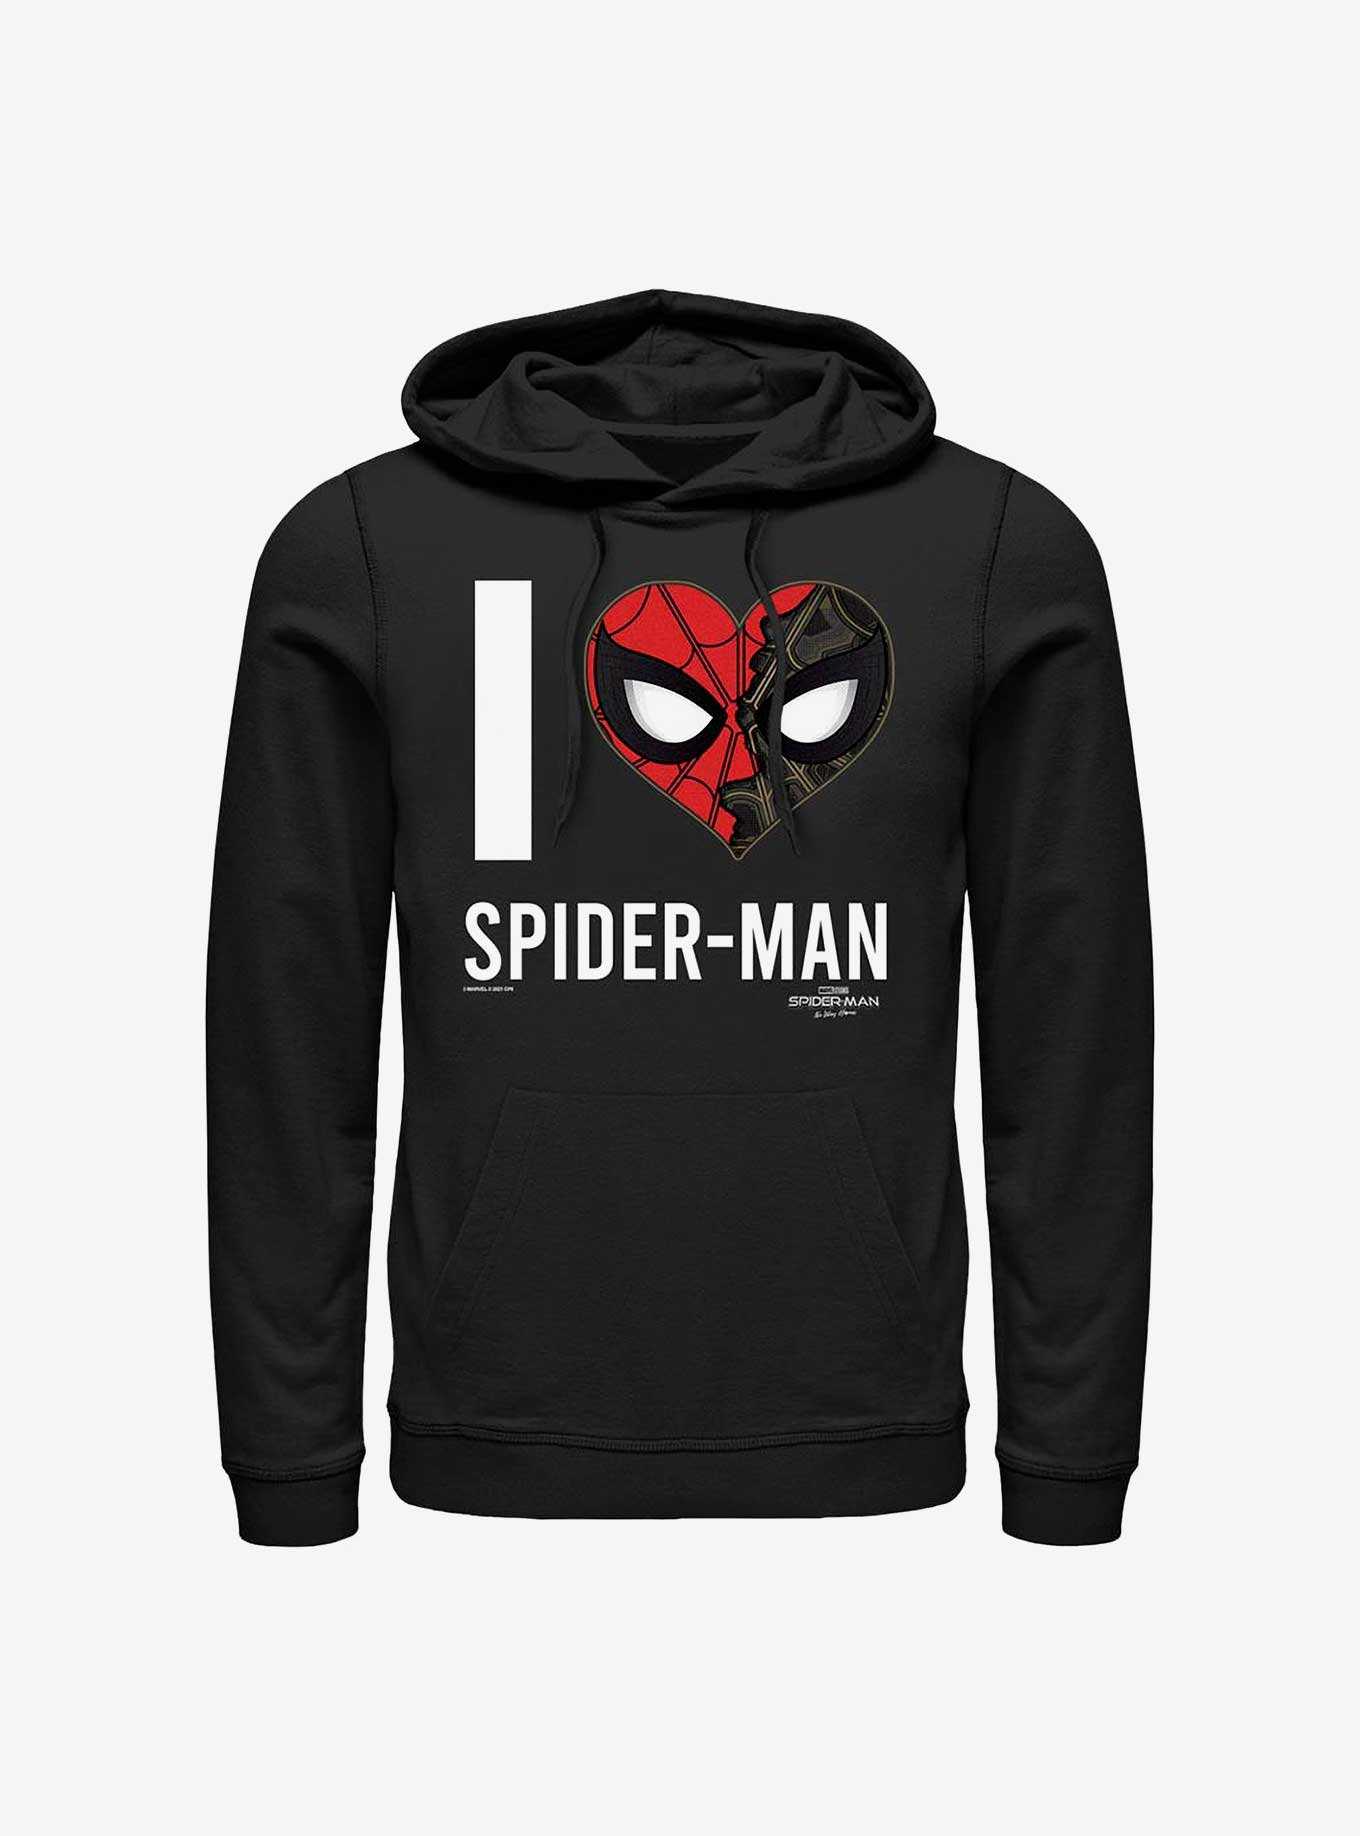 Marvel Spider-Man: No Way Home I Heart Spider-Man Hoodie, , hi-res